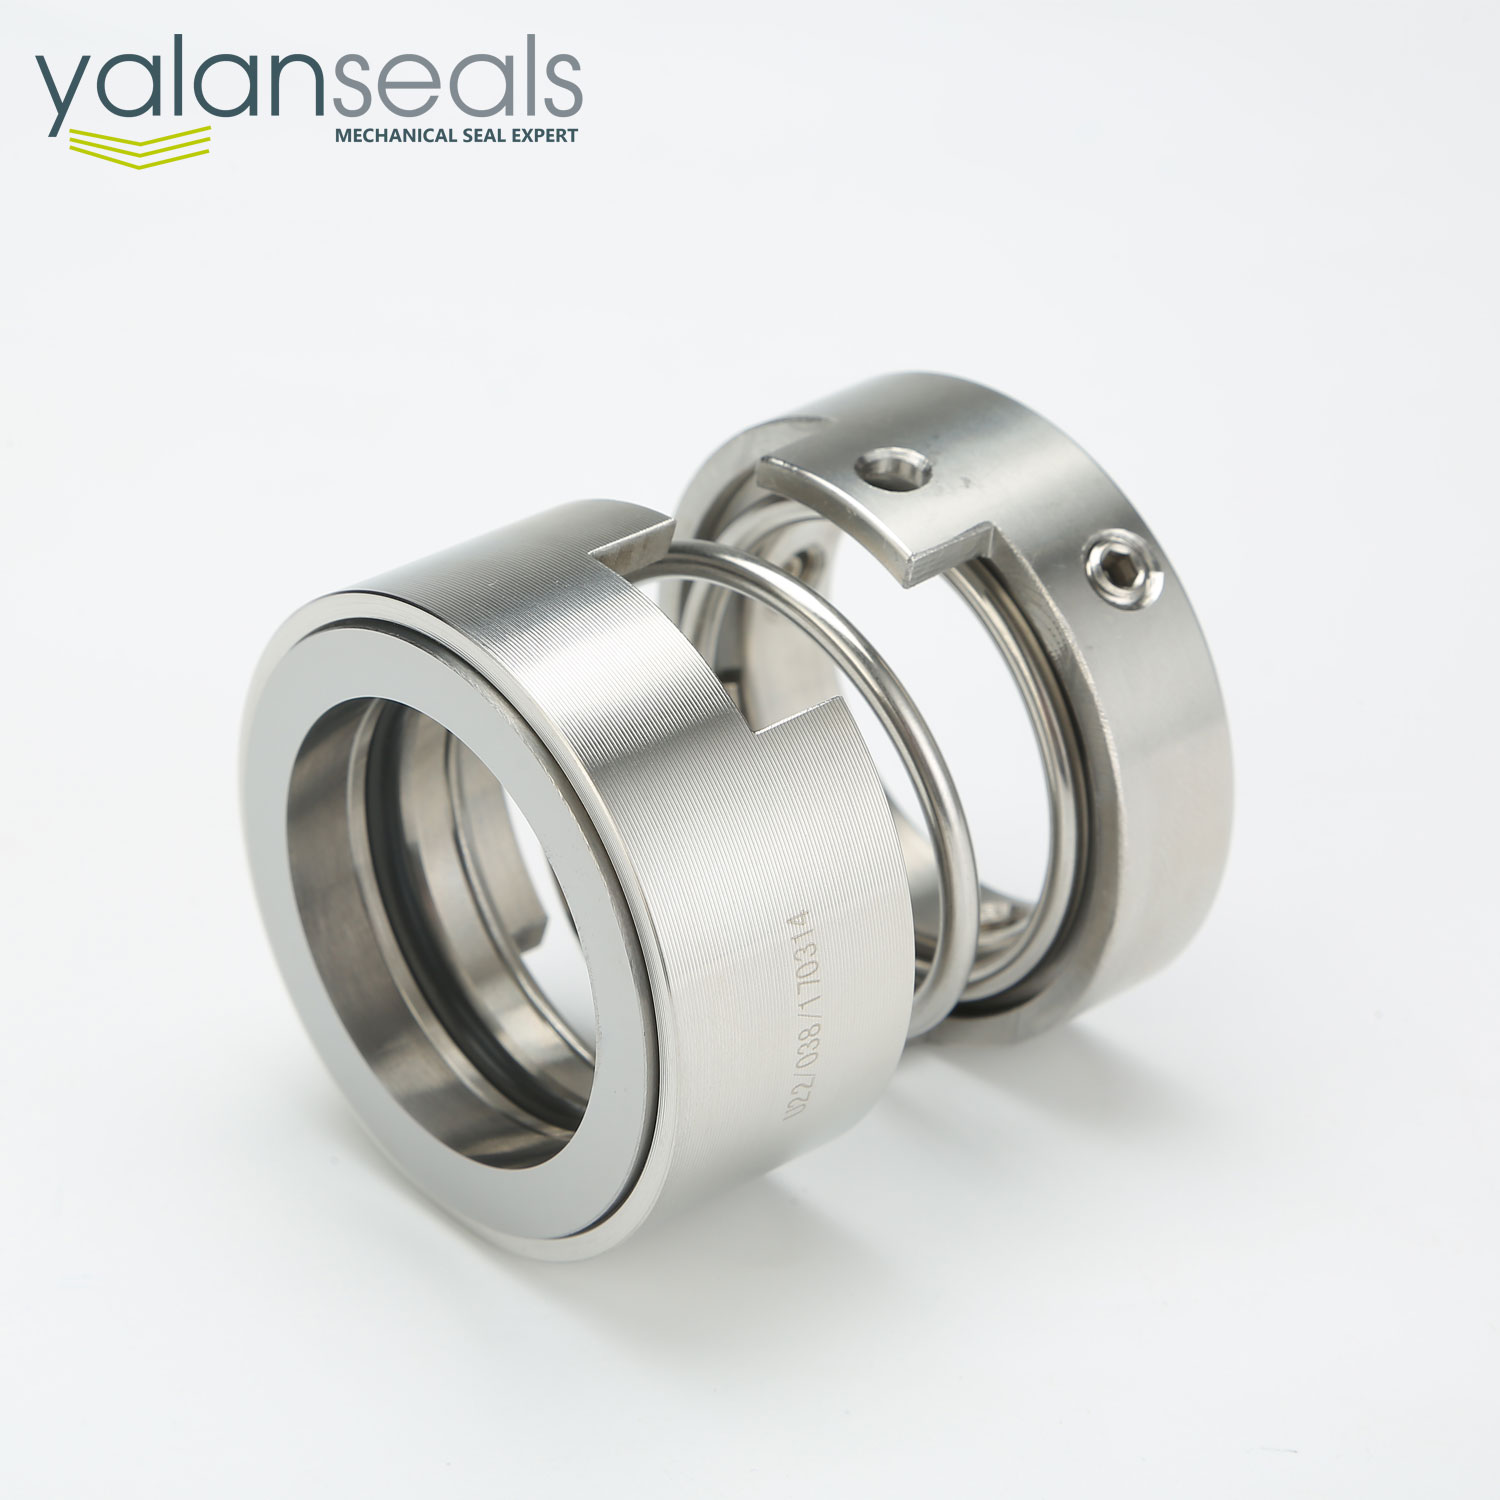 YALAN 106U Single Spring Mechanical Seal for Chemical Centrifugal Pumps